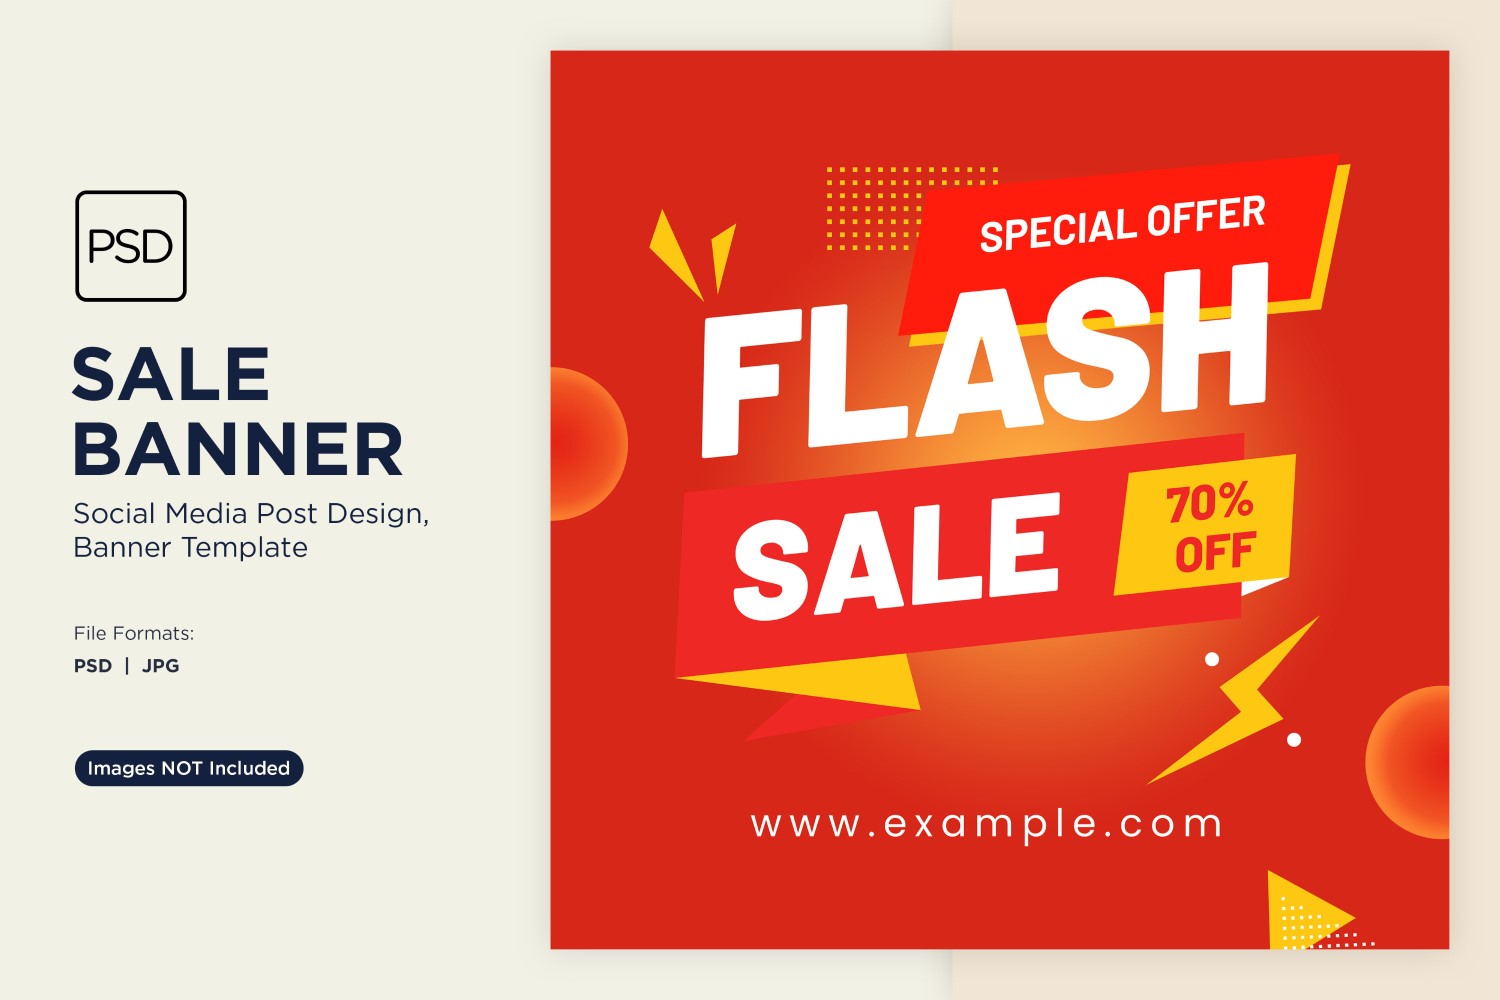 Flash into Savings Flash Sale Banner Design Template 3